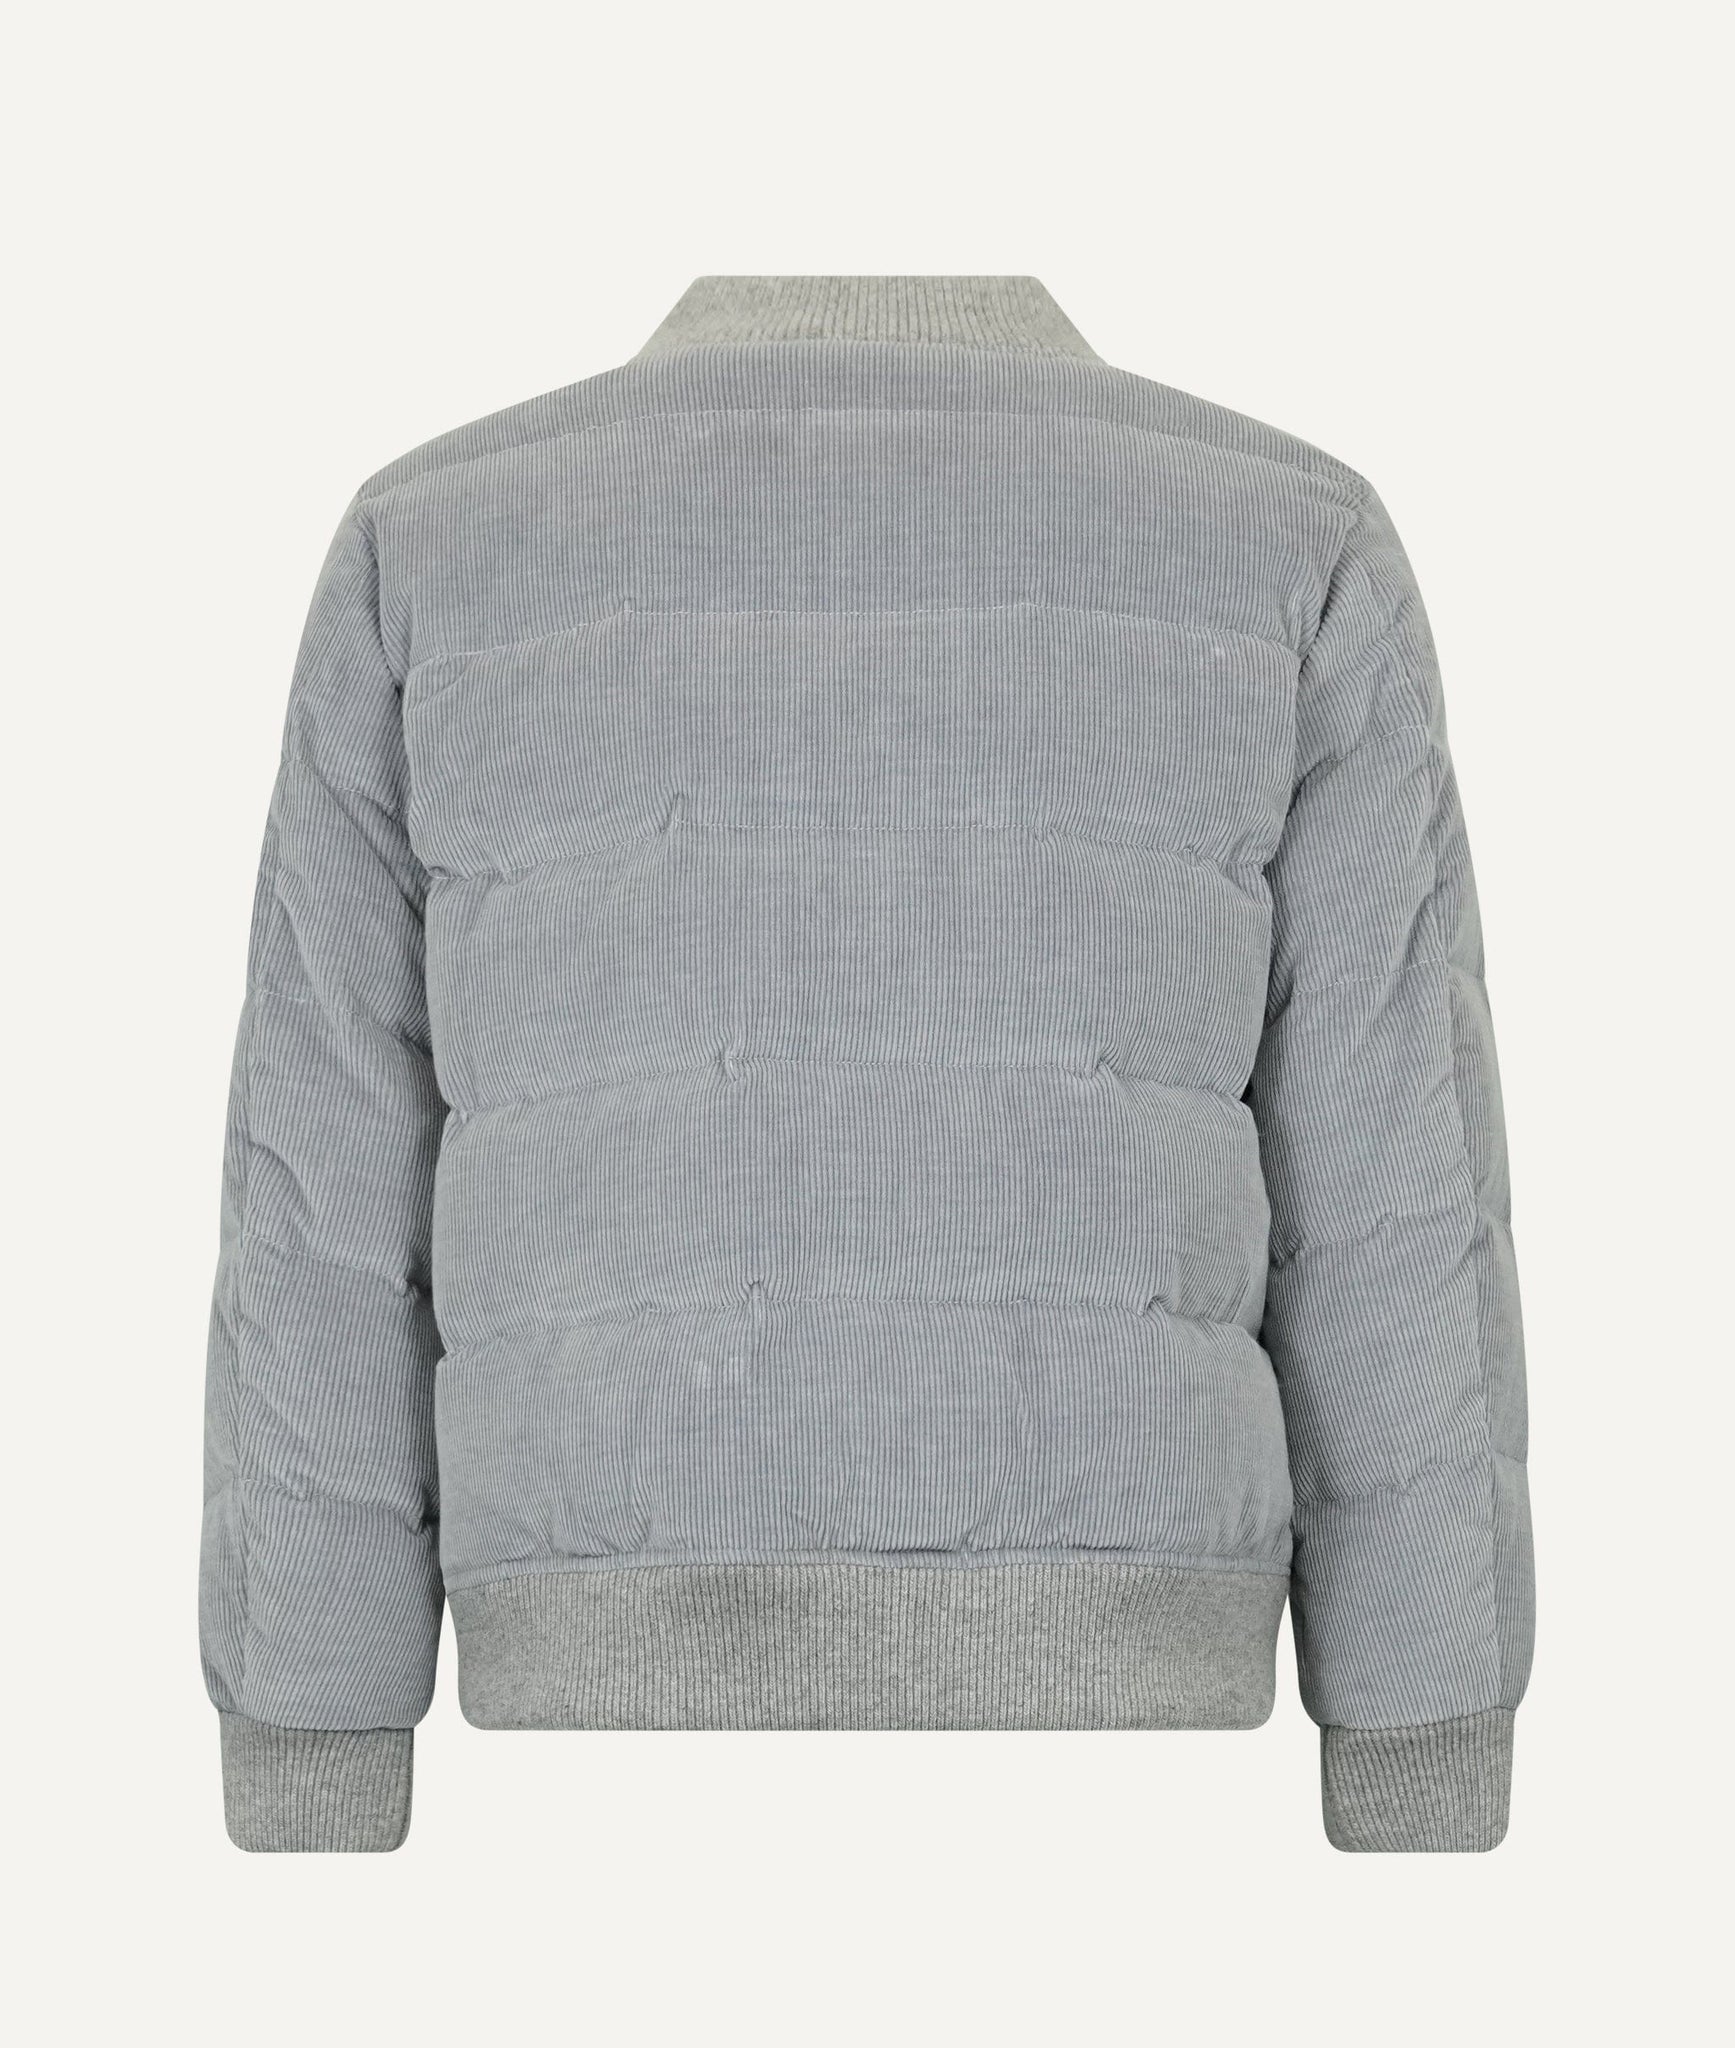 Eleventy - Down Jacket in Cotton & Cashmere